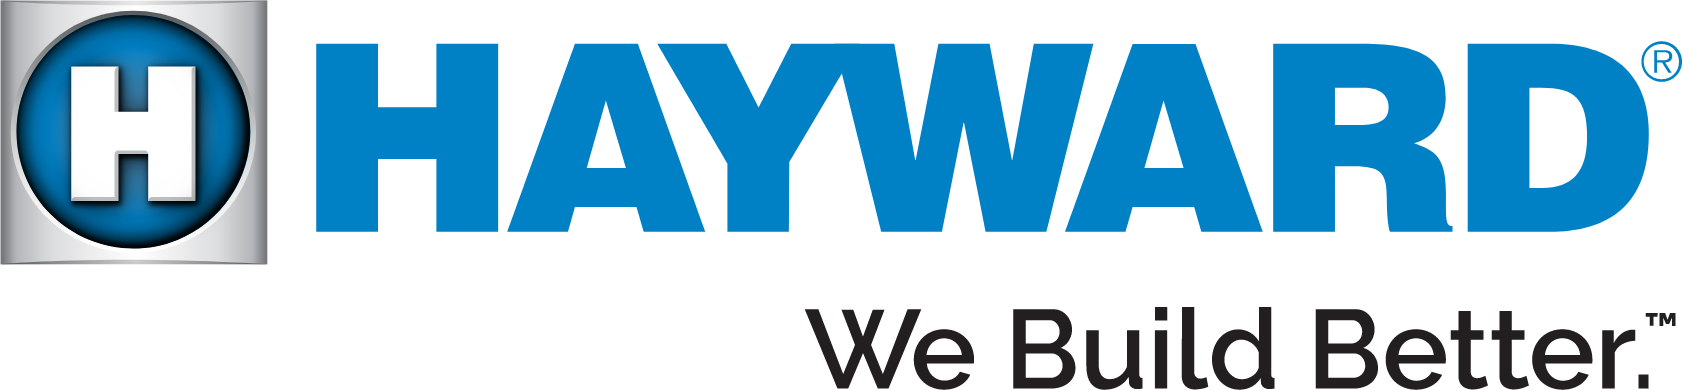 Hayward logo large (transparent PNG)